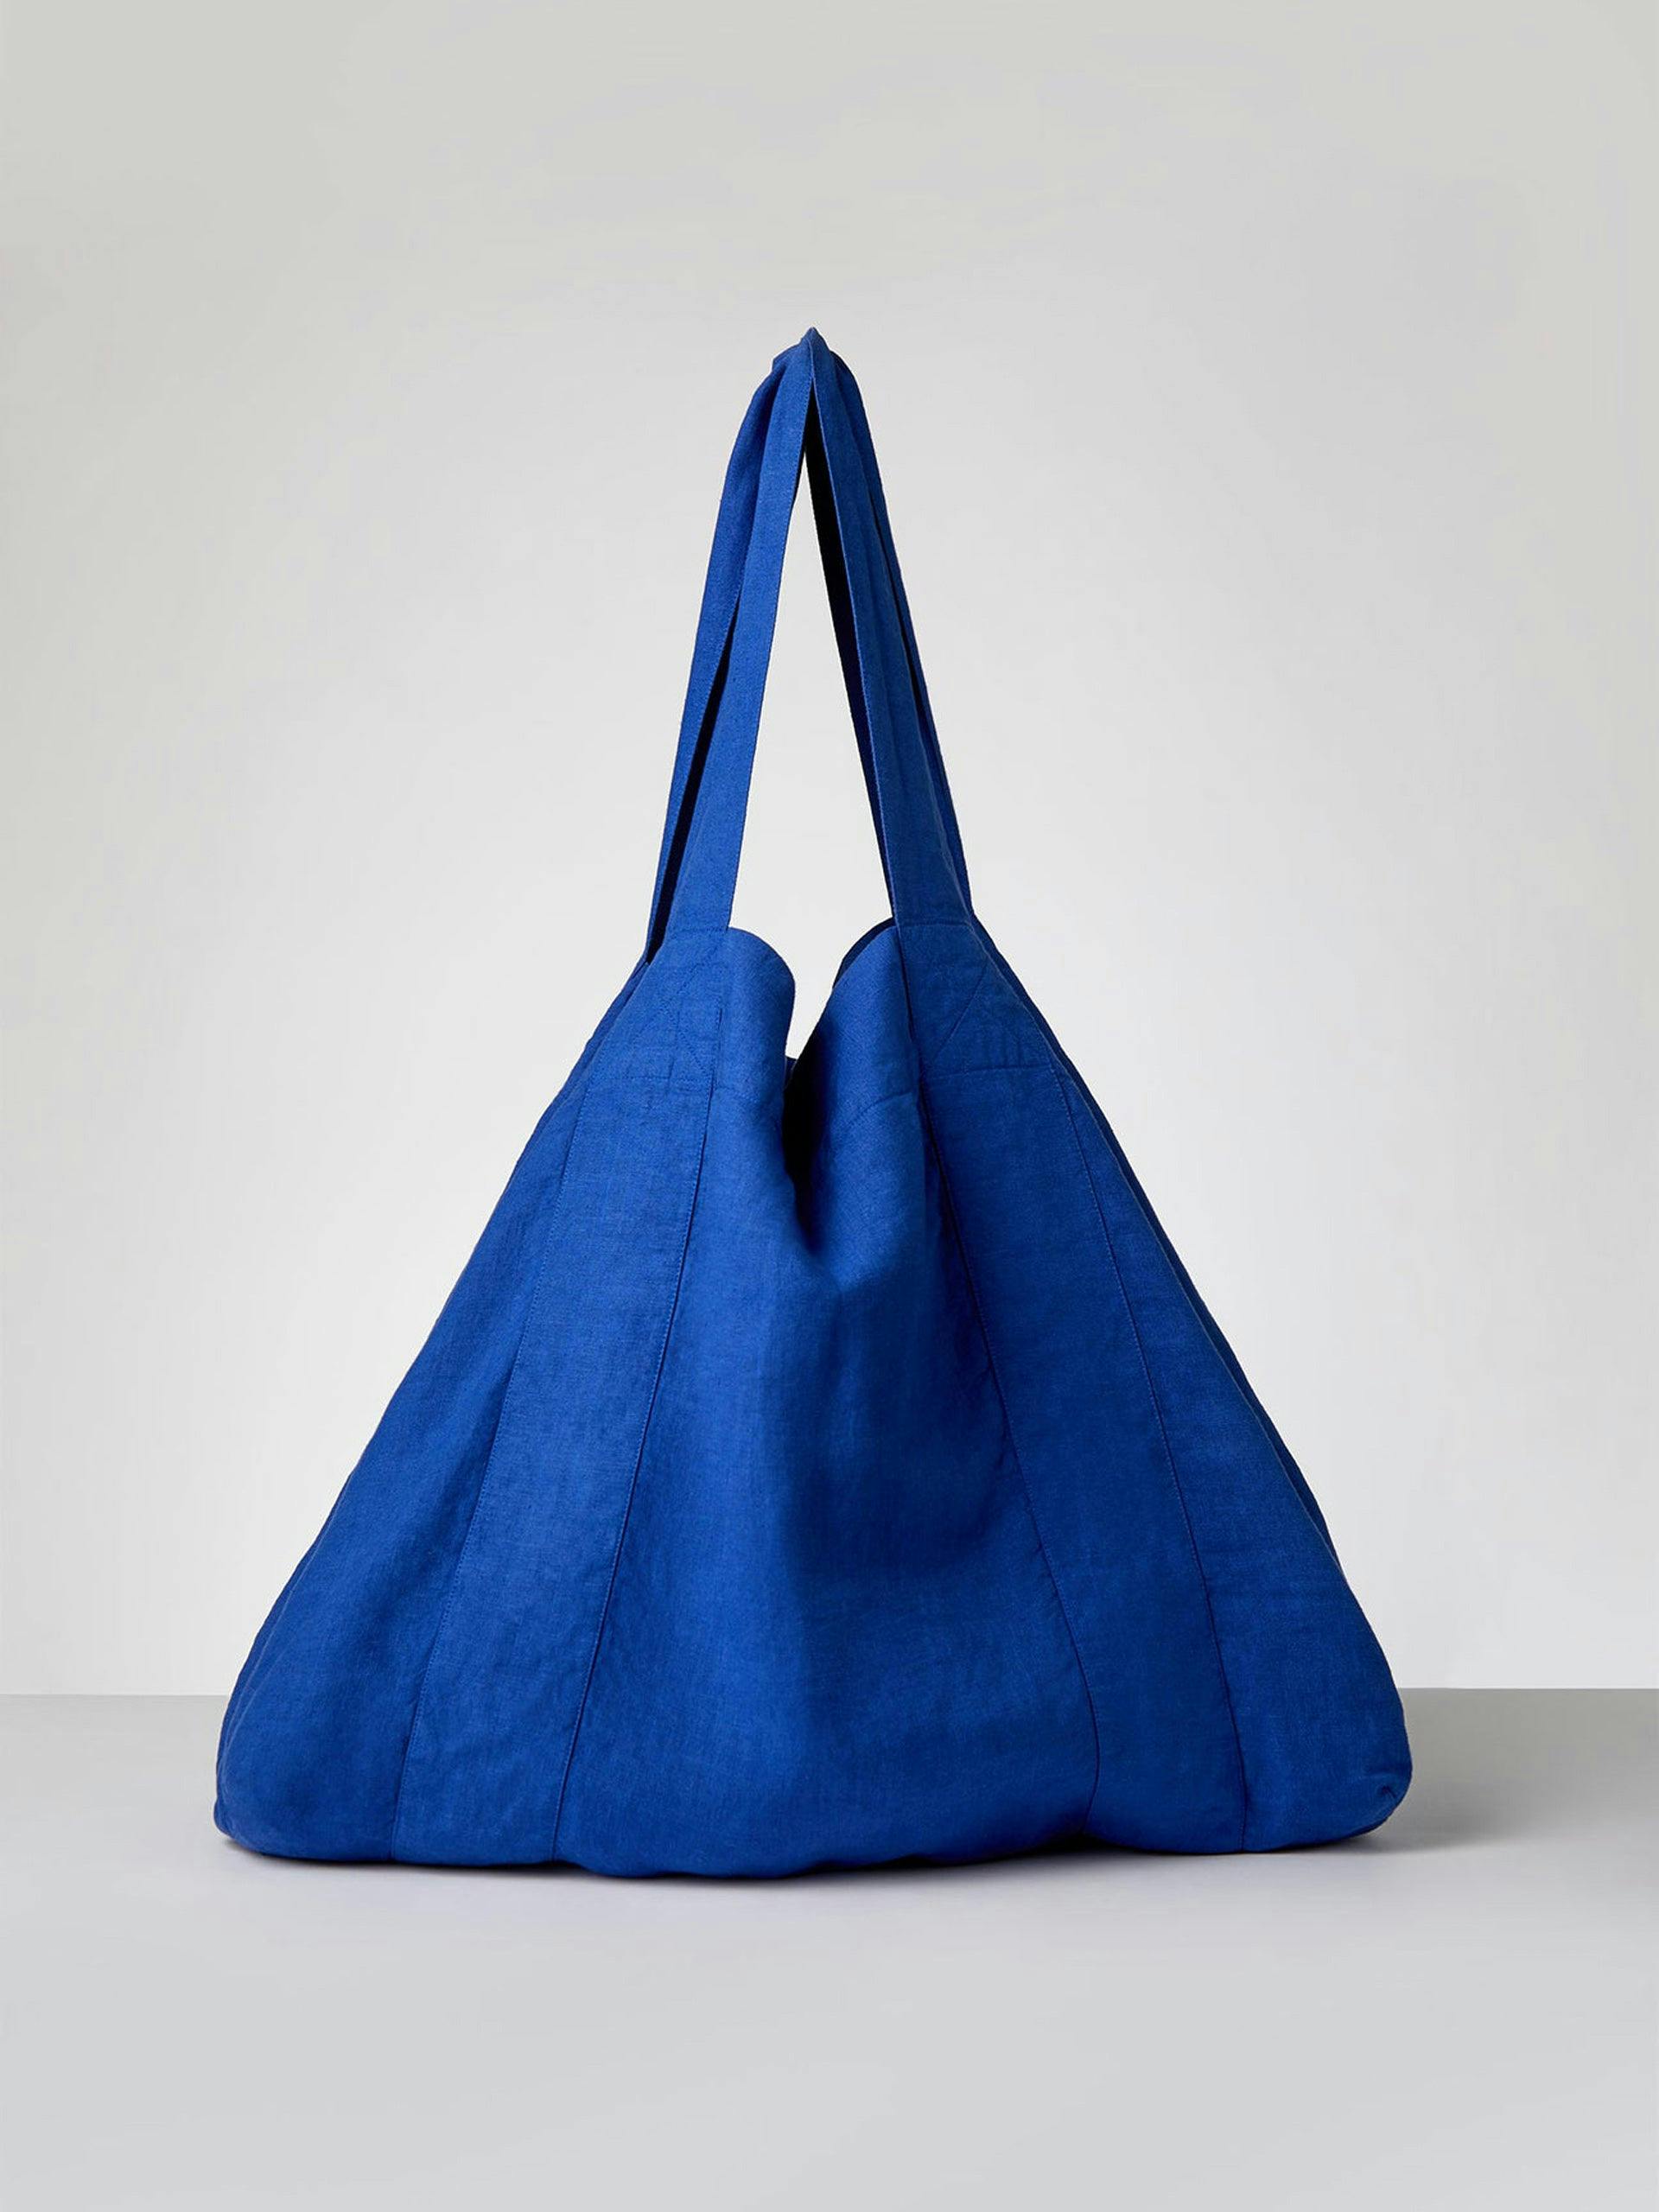 Blue linen tote bag